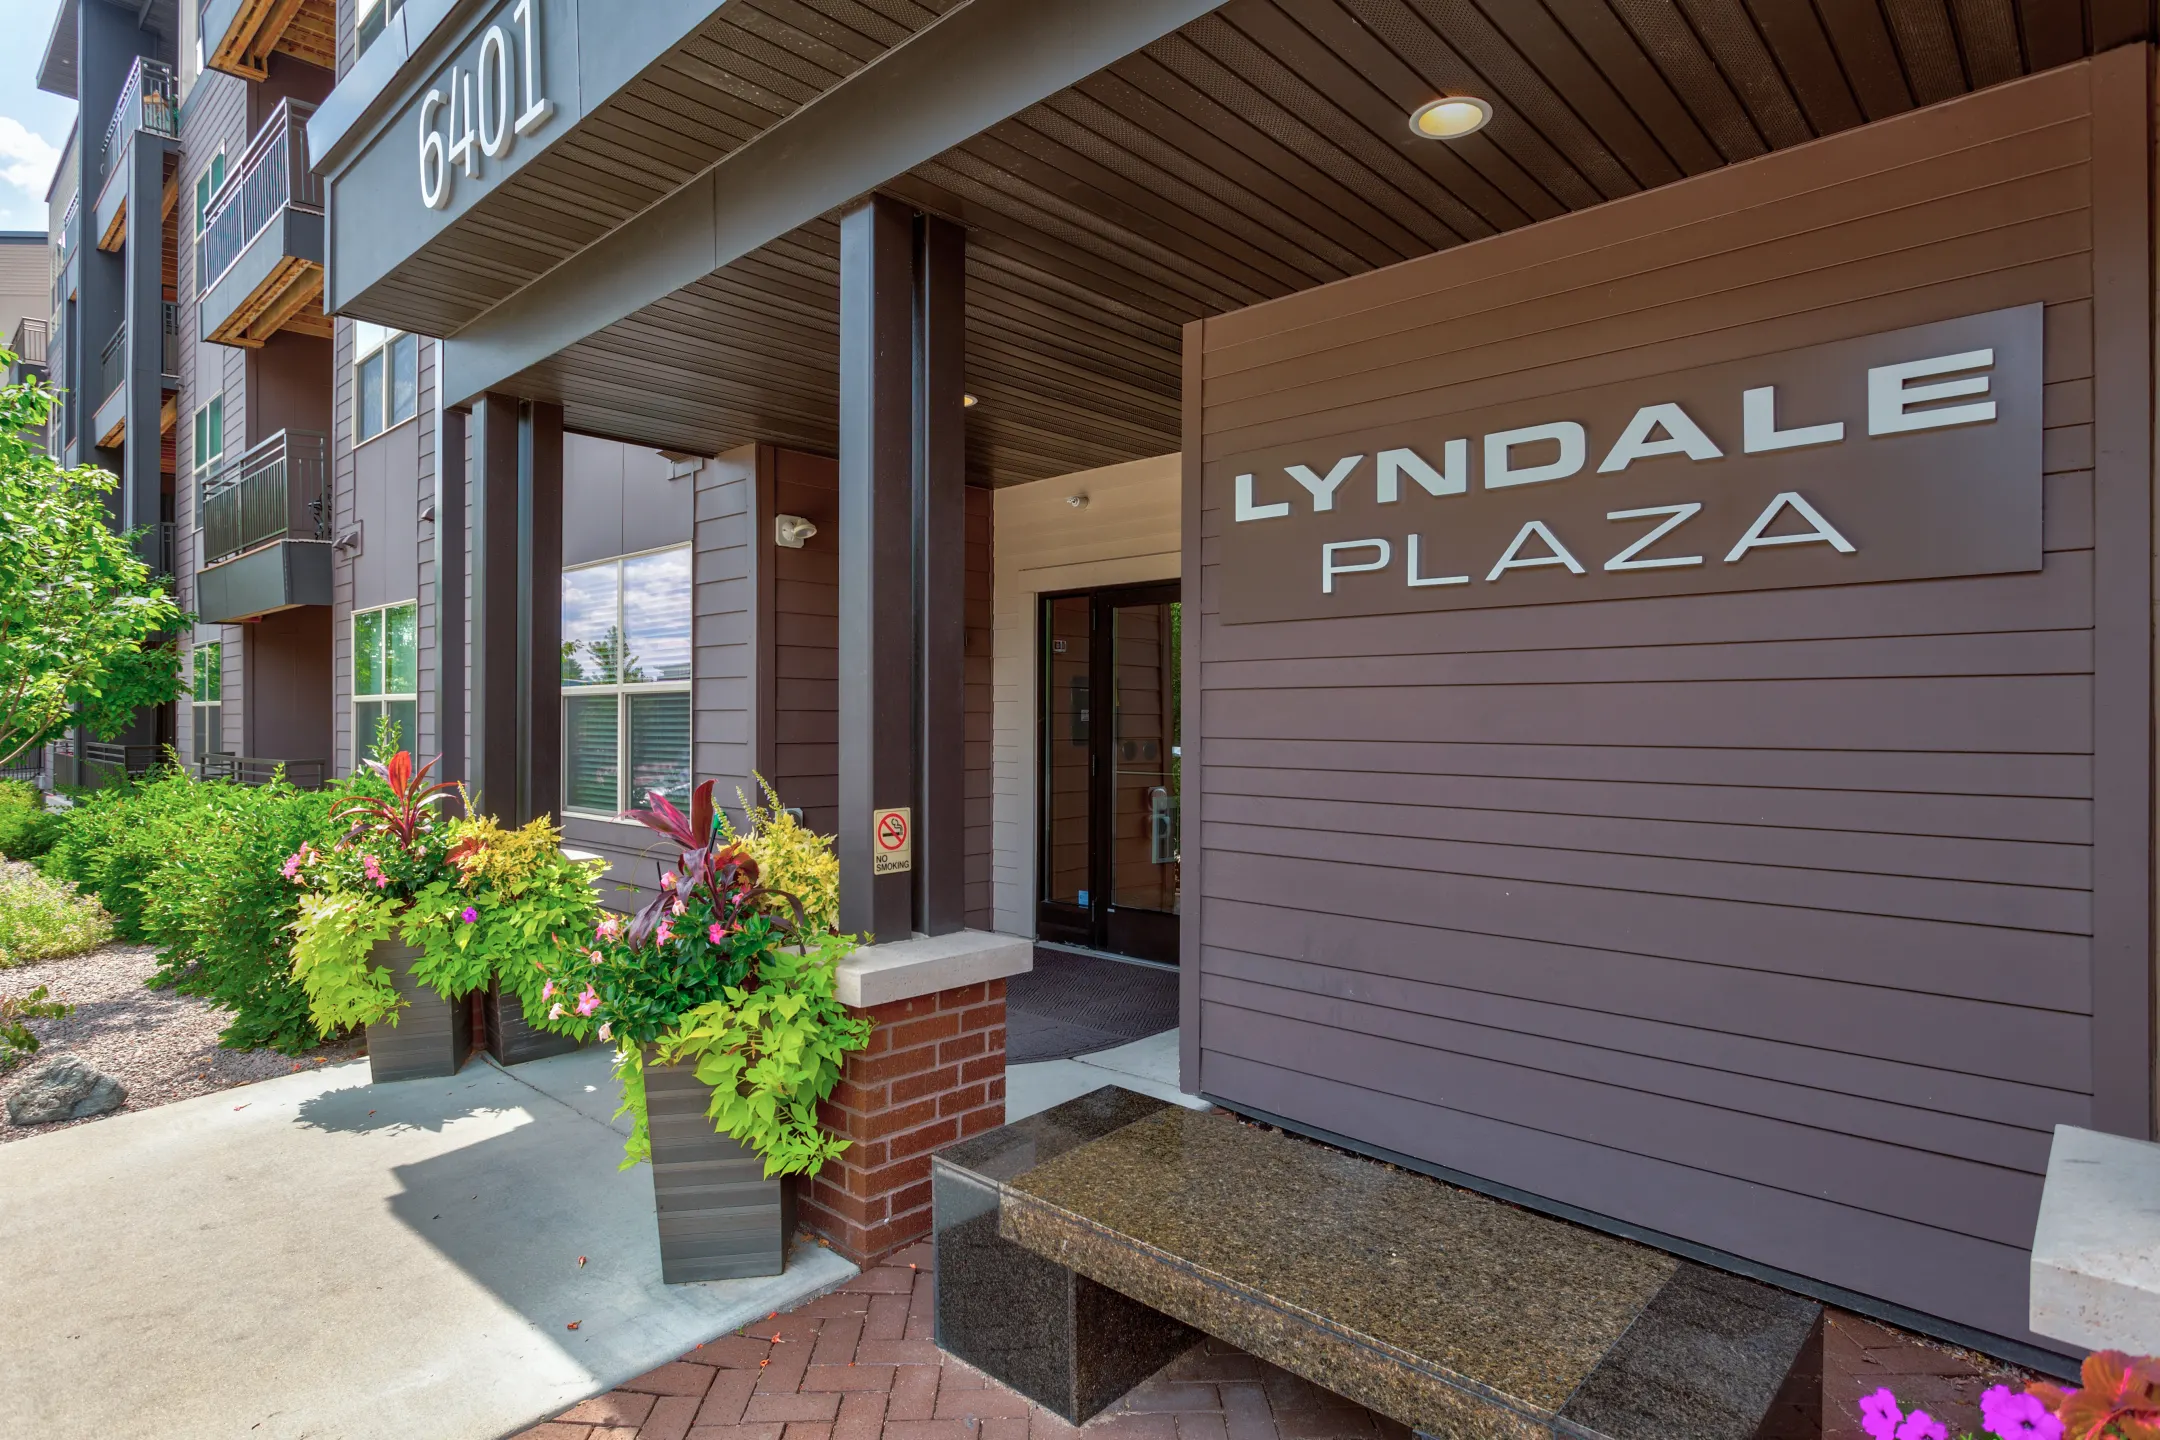 Building - Lyndale Plaza - Richfield, MN